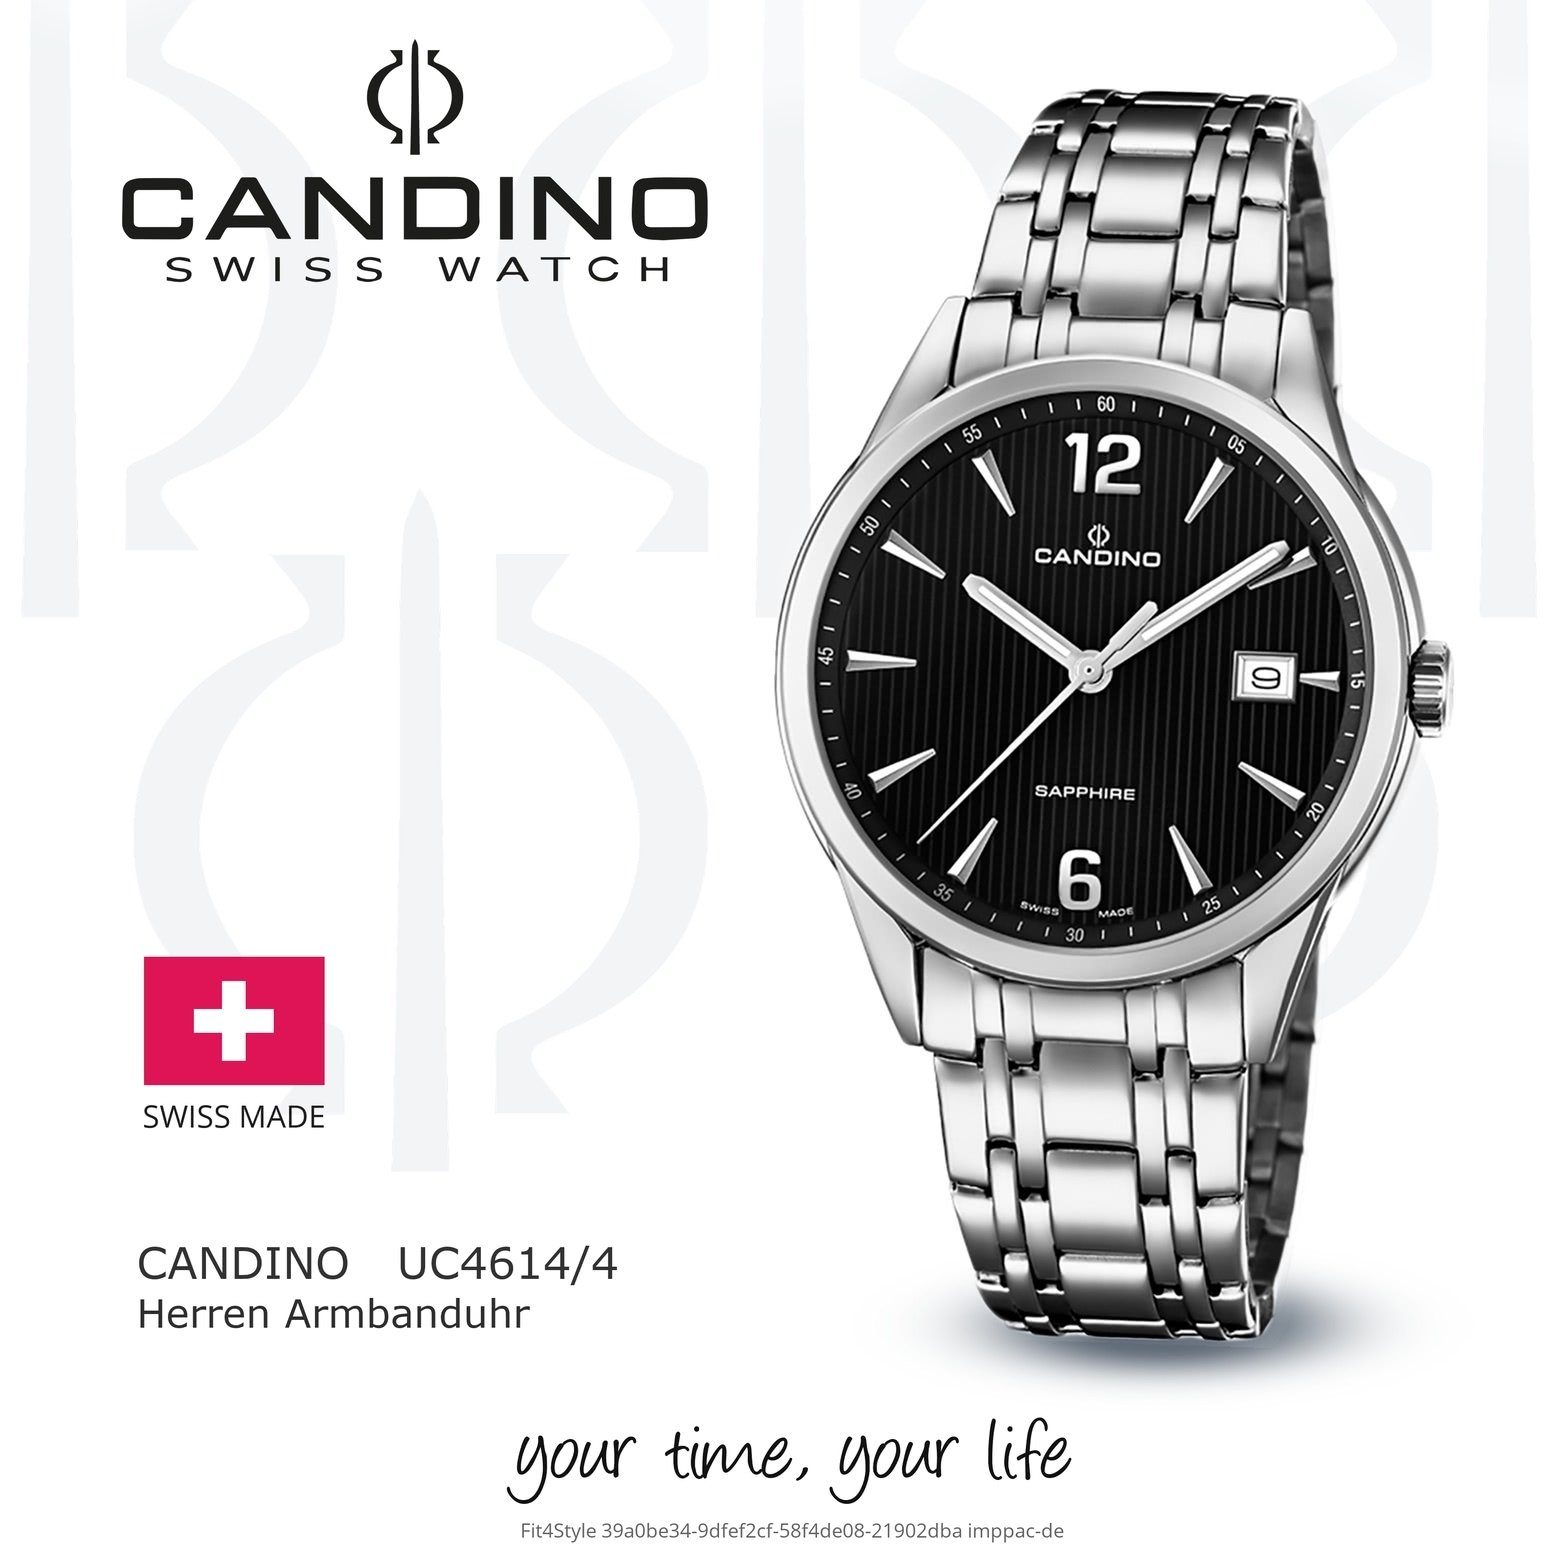 Uhr Armbanduhr C4614/4, Herren Candino Candino Edelstahlarmband Analog rund, Elegant Quarzuhr Herren silber,